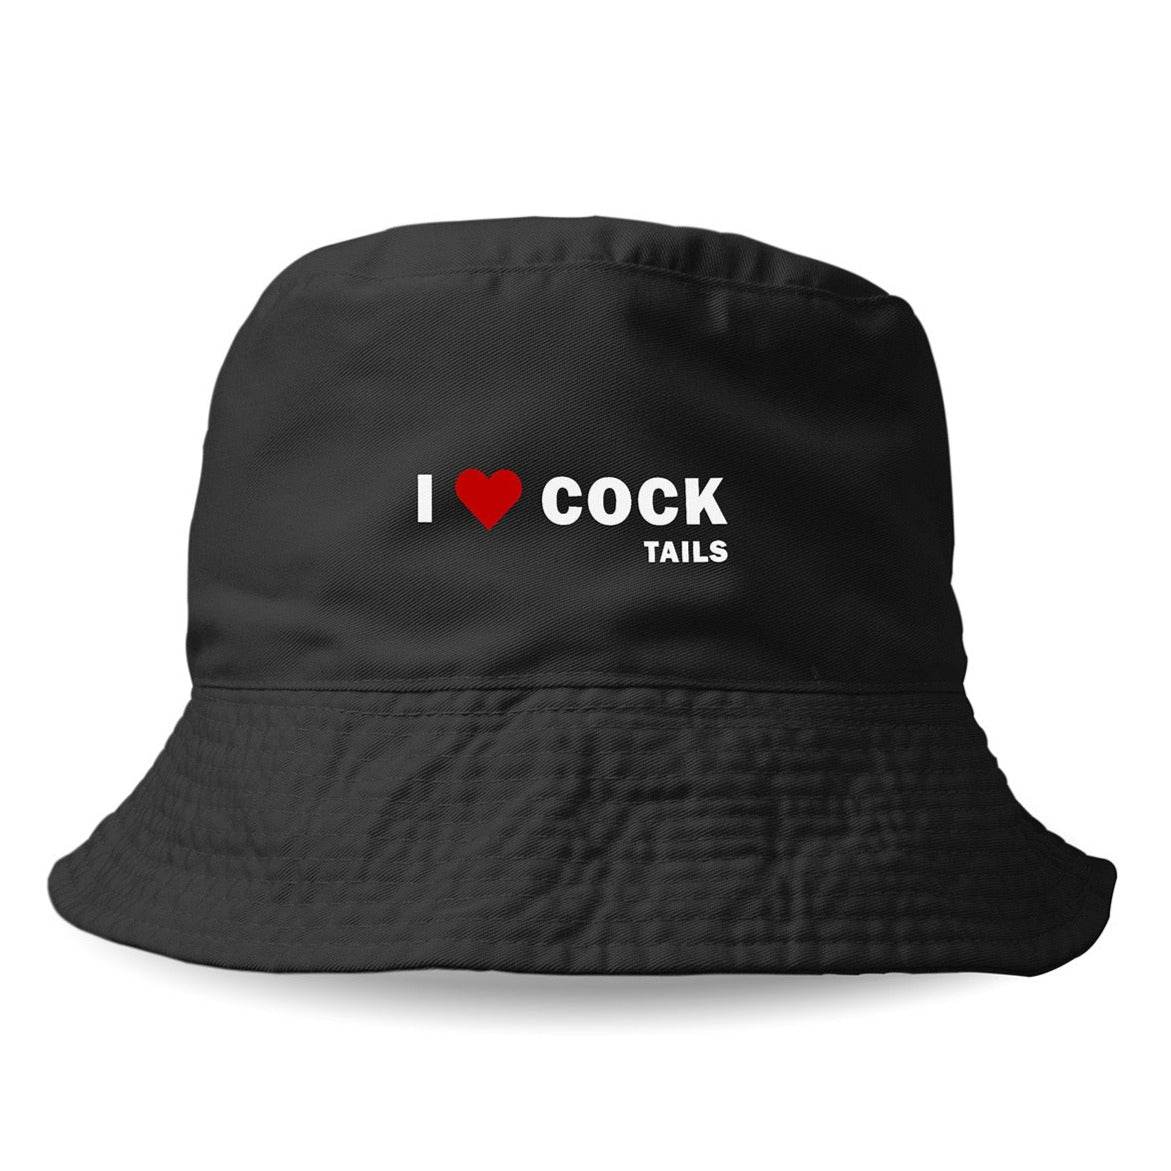 I LOVE COCKTAILS - Bucket Hat